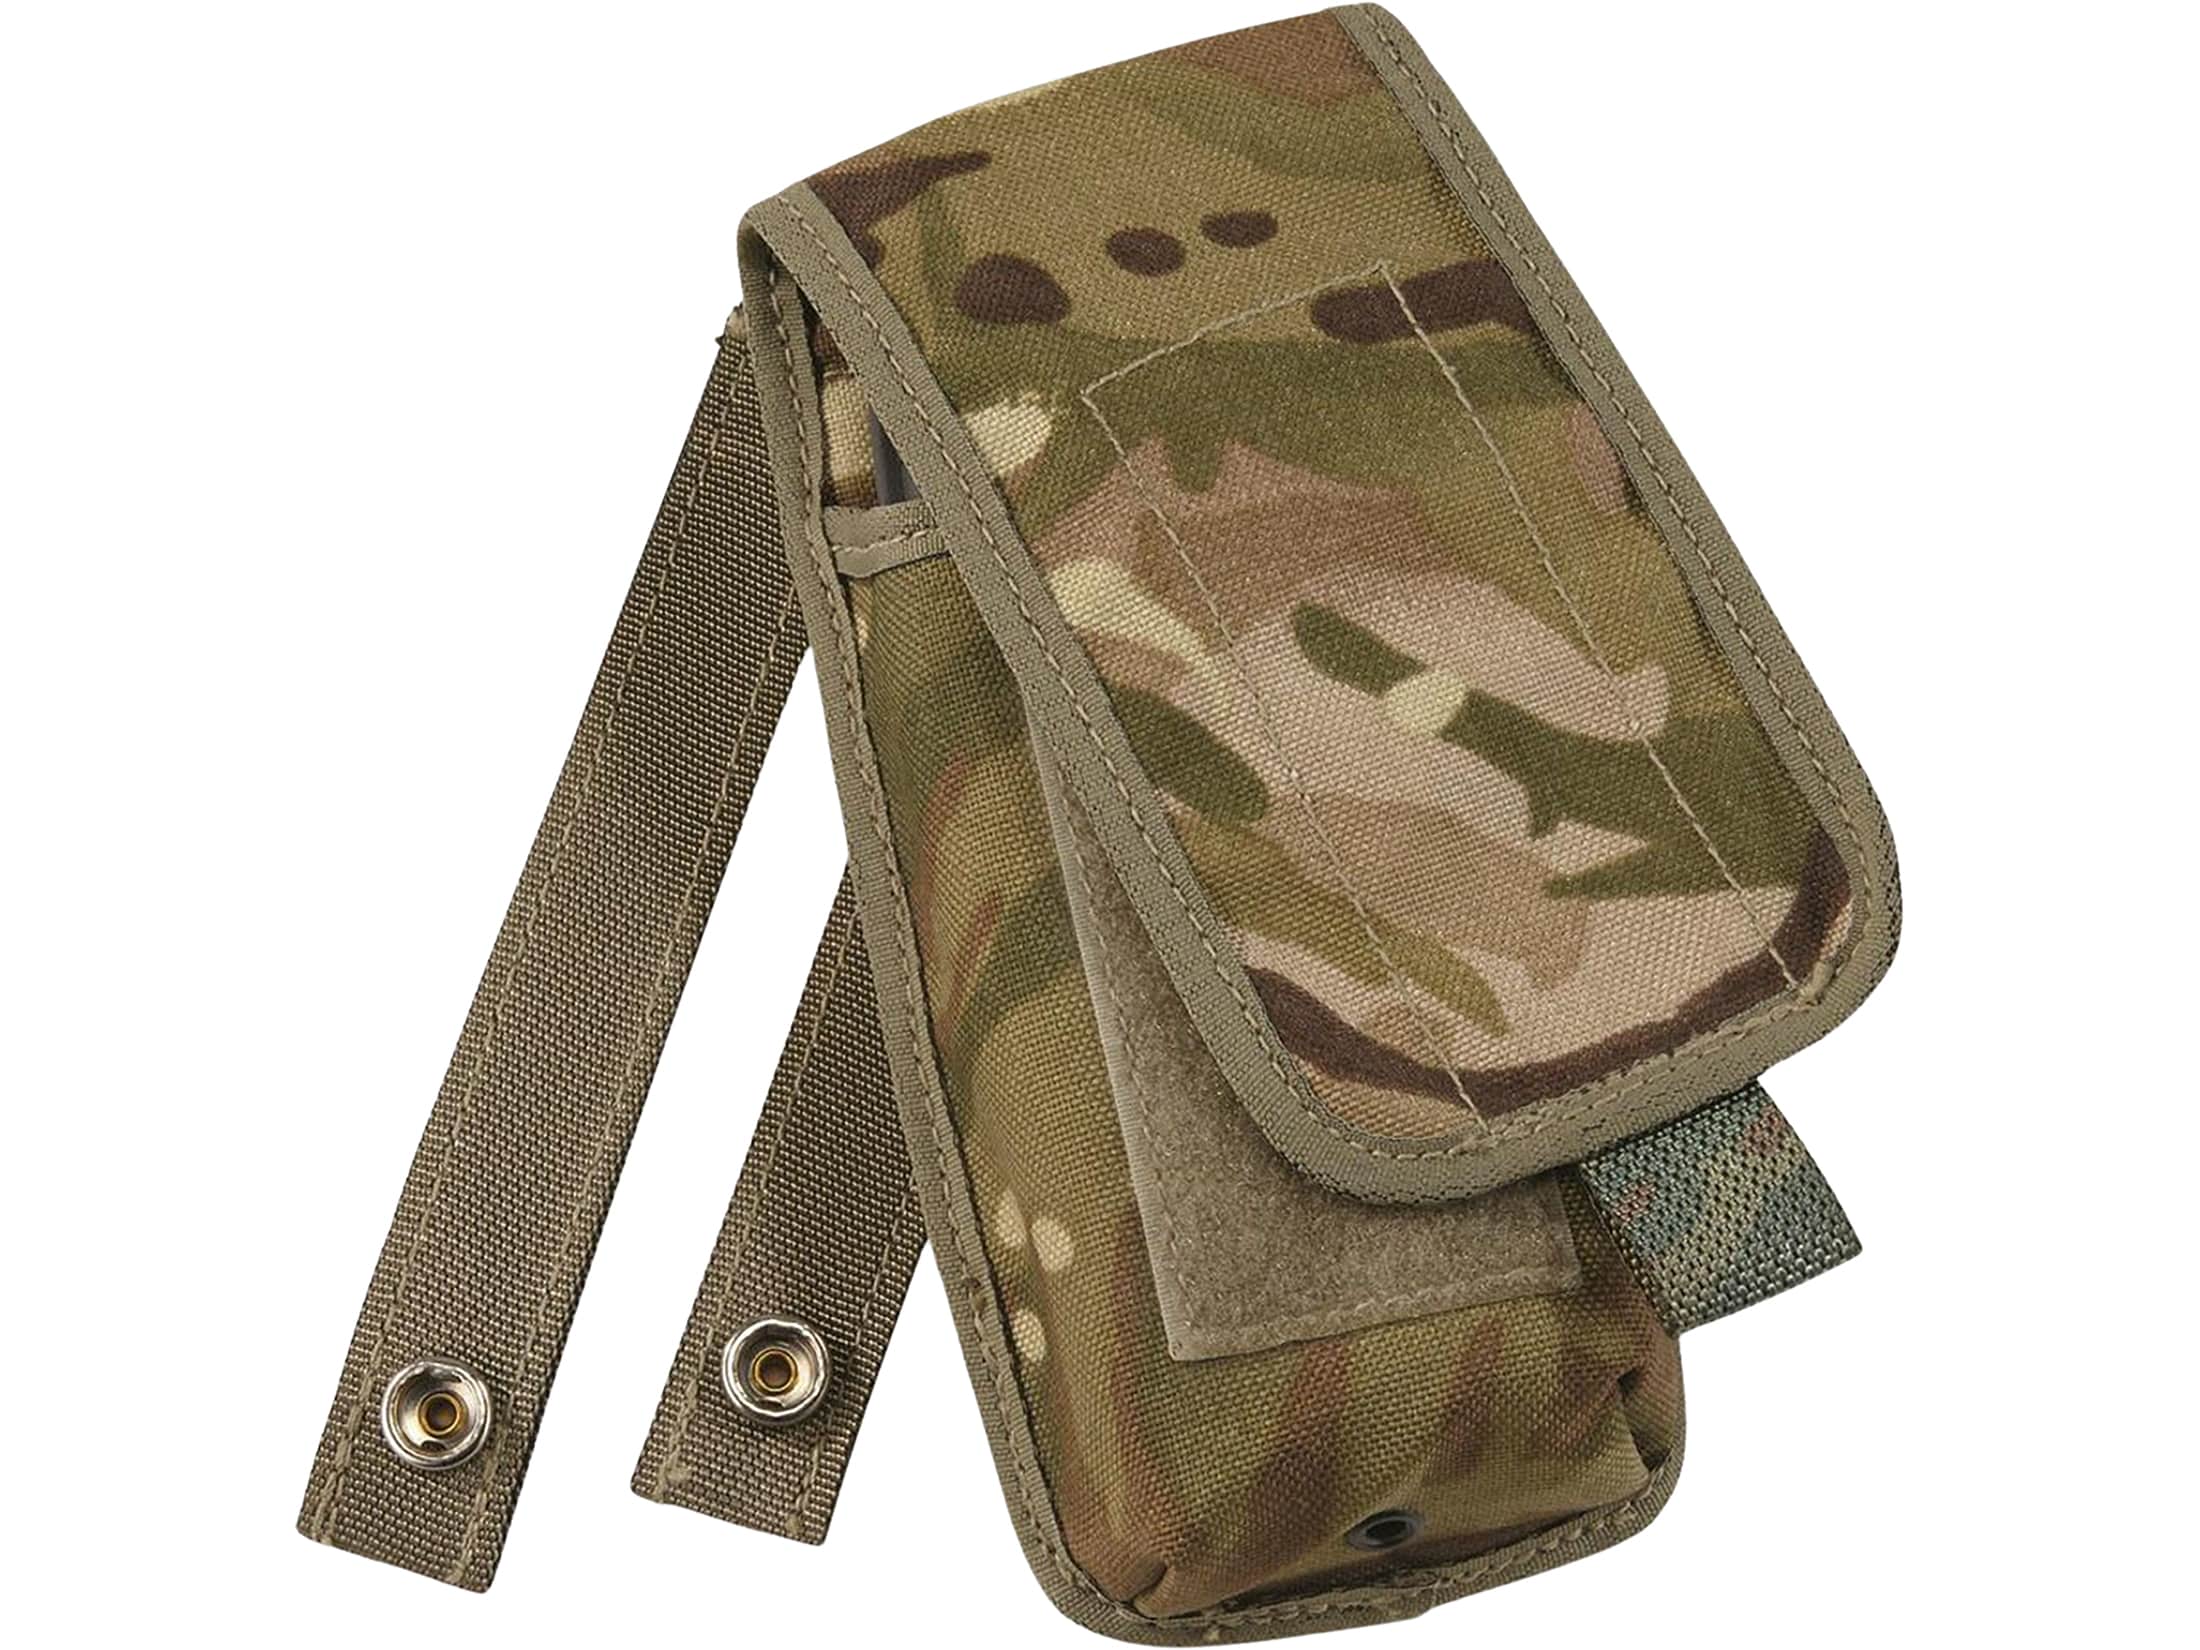 2 x British army surplus MTP camouflage SMOKE GRENADE pouch Grade 1 